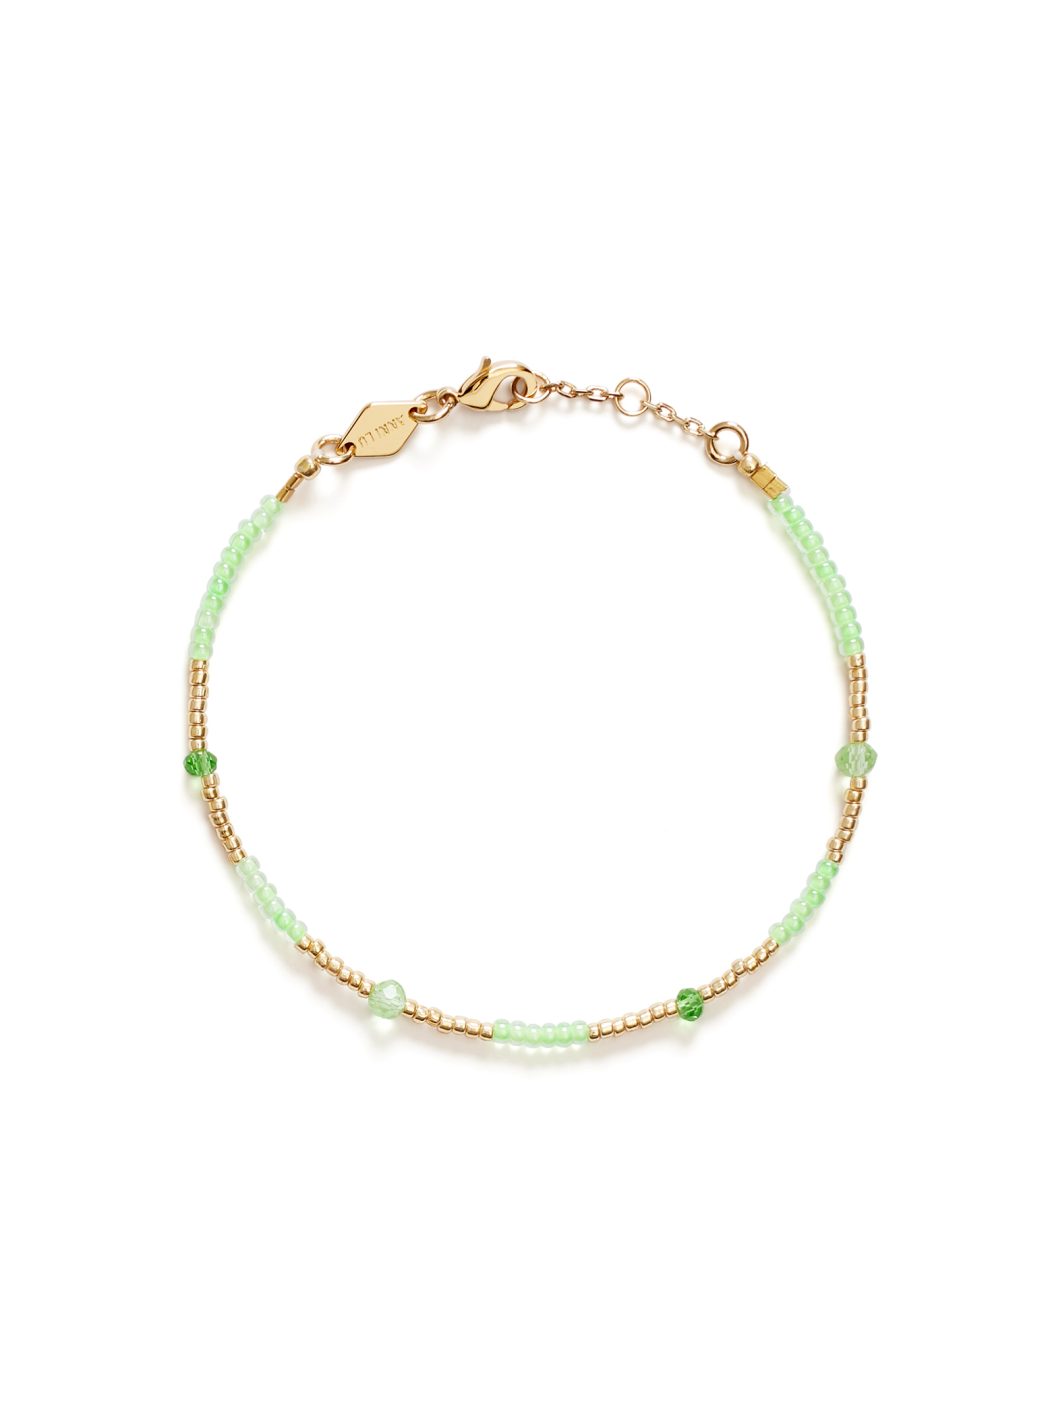 anni-lu-clemence-bracelet-neon-green